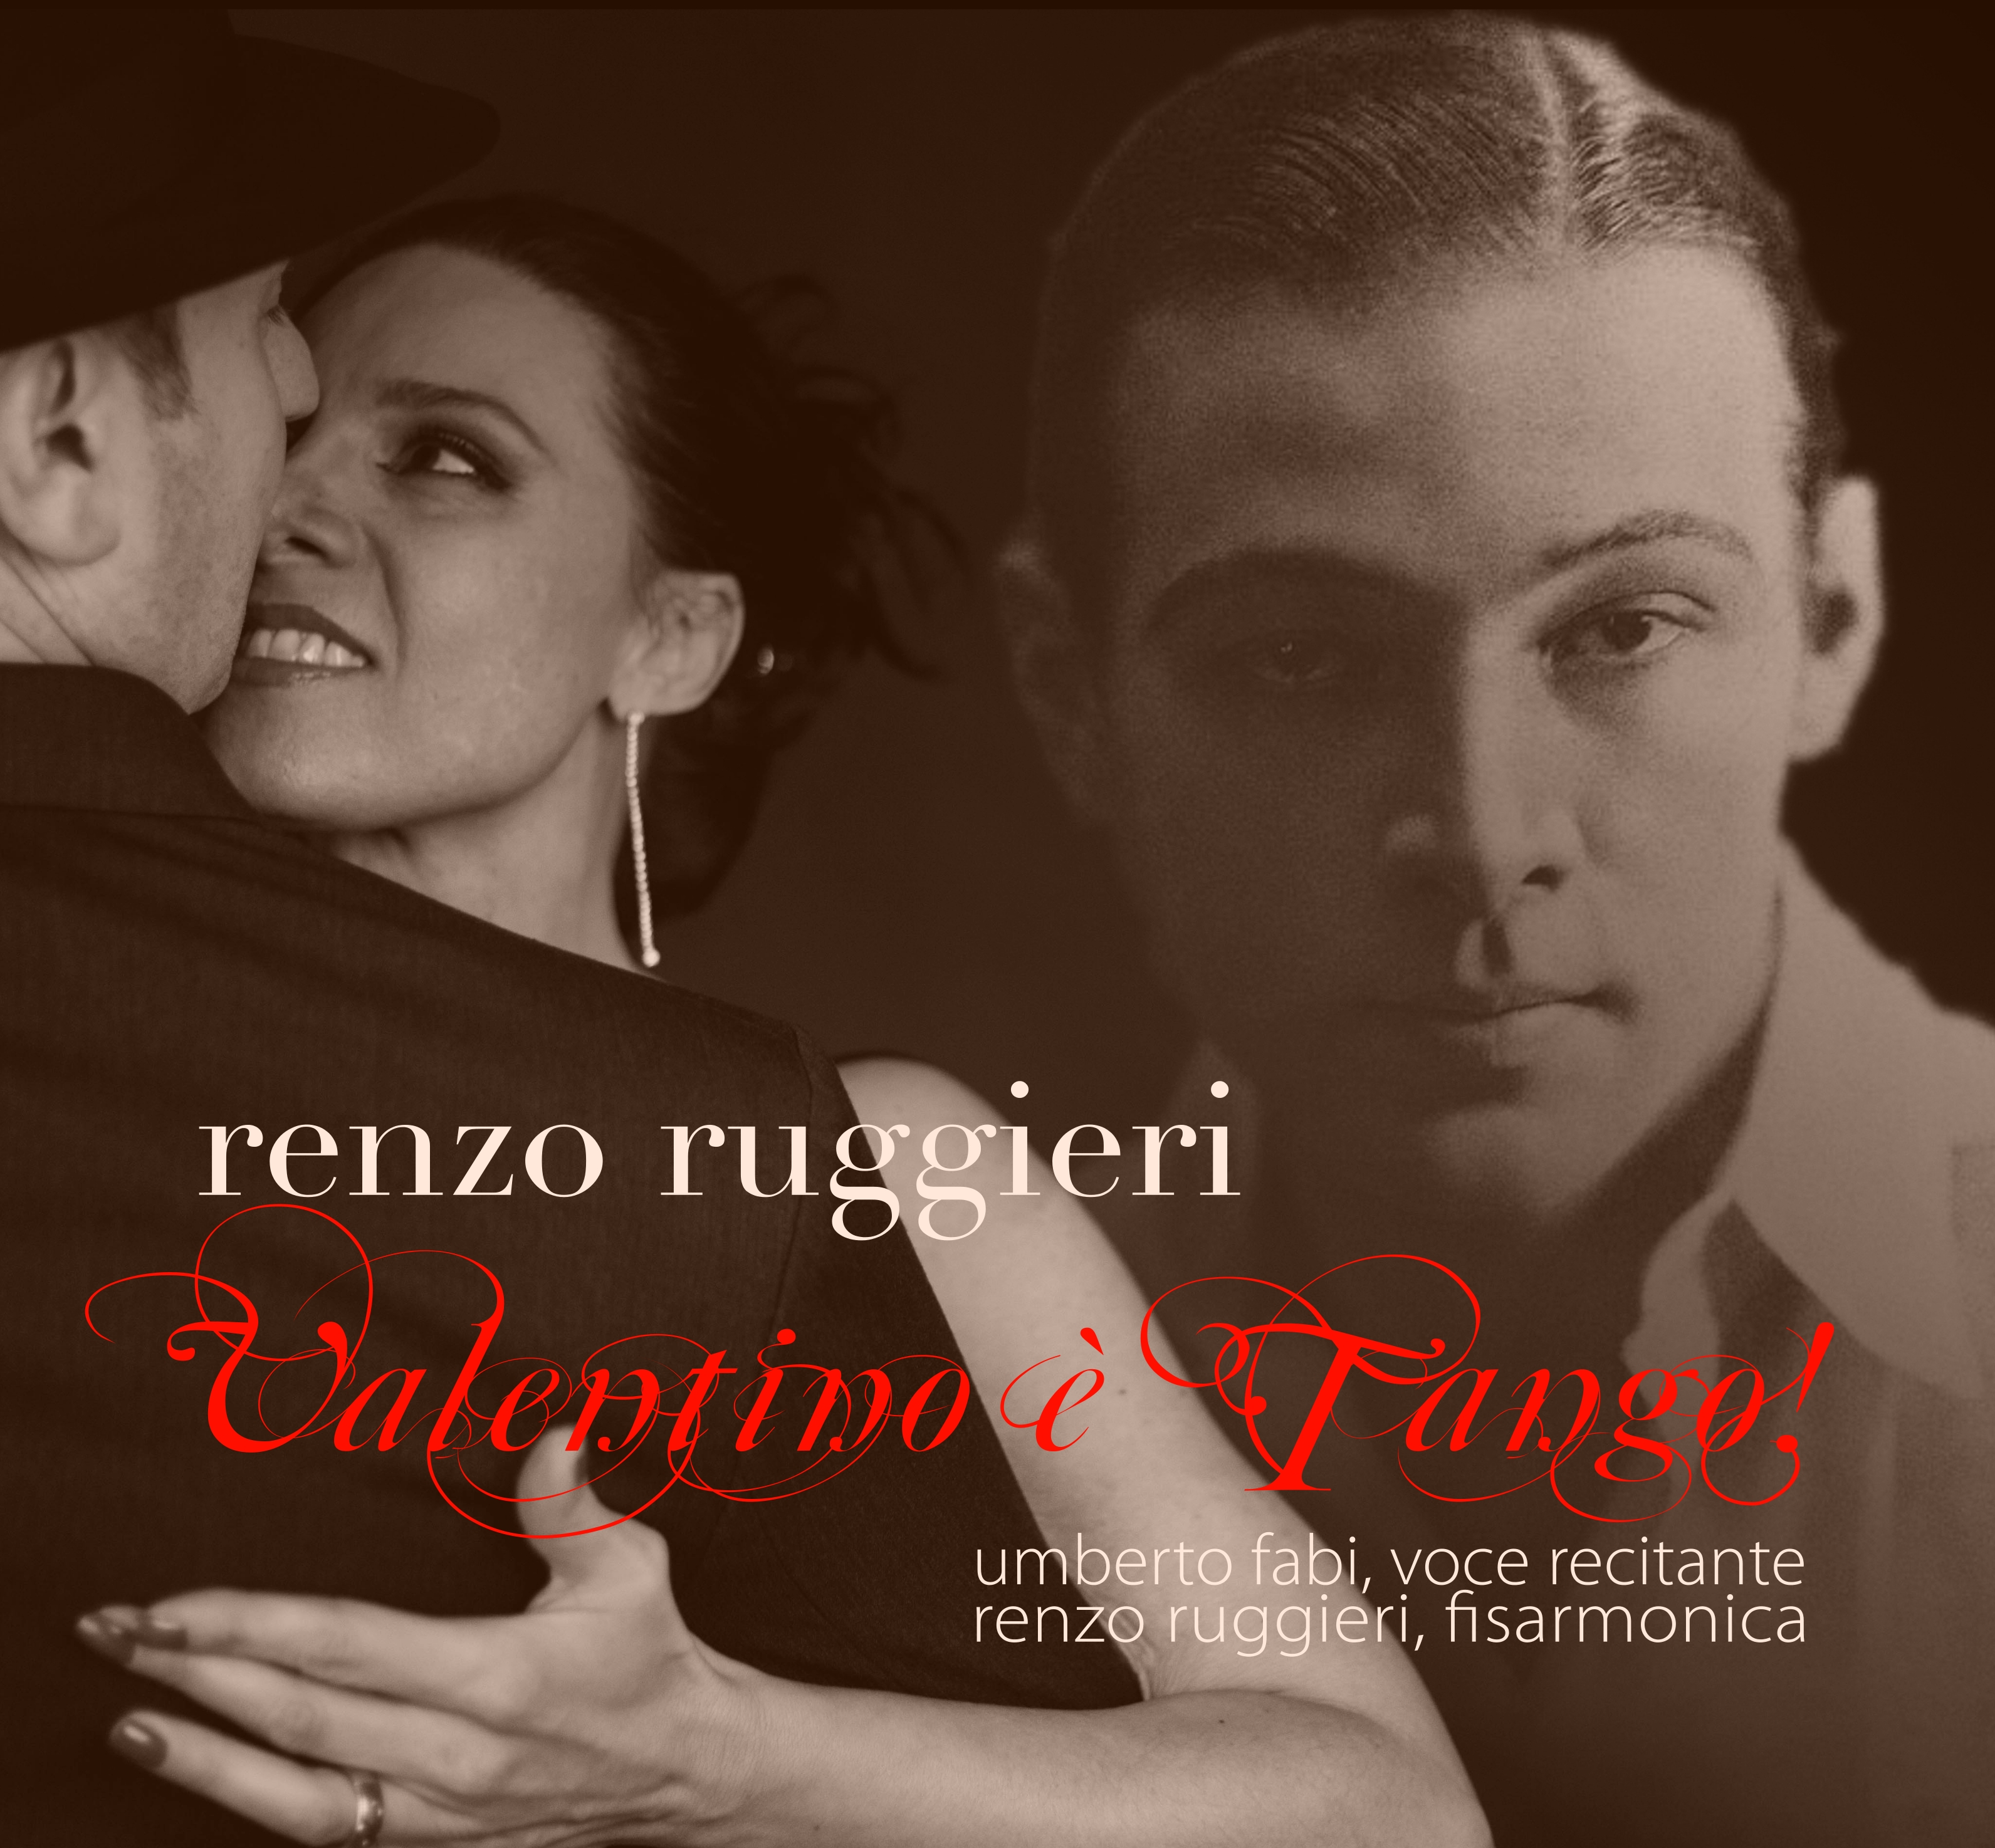 Cs presentazione cd “Valentino è Tango!” di Renzo Ruggieri e Umberto Fabi